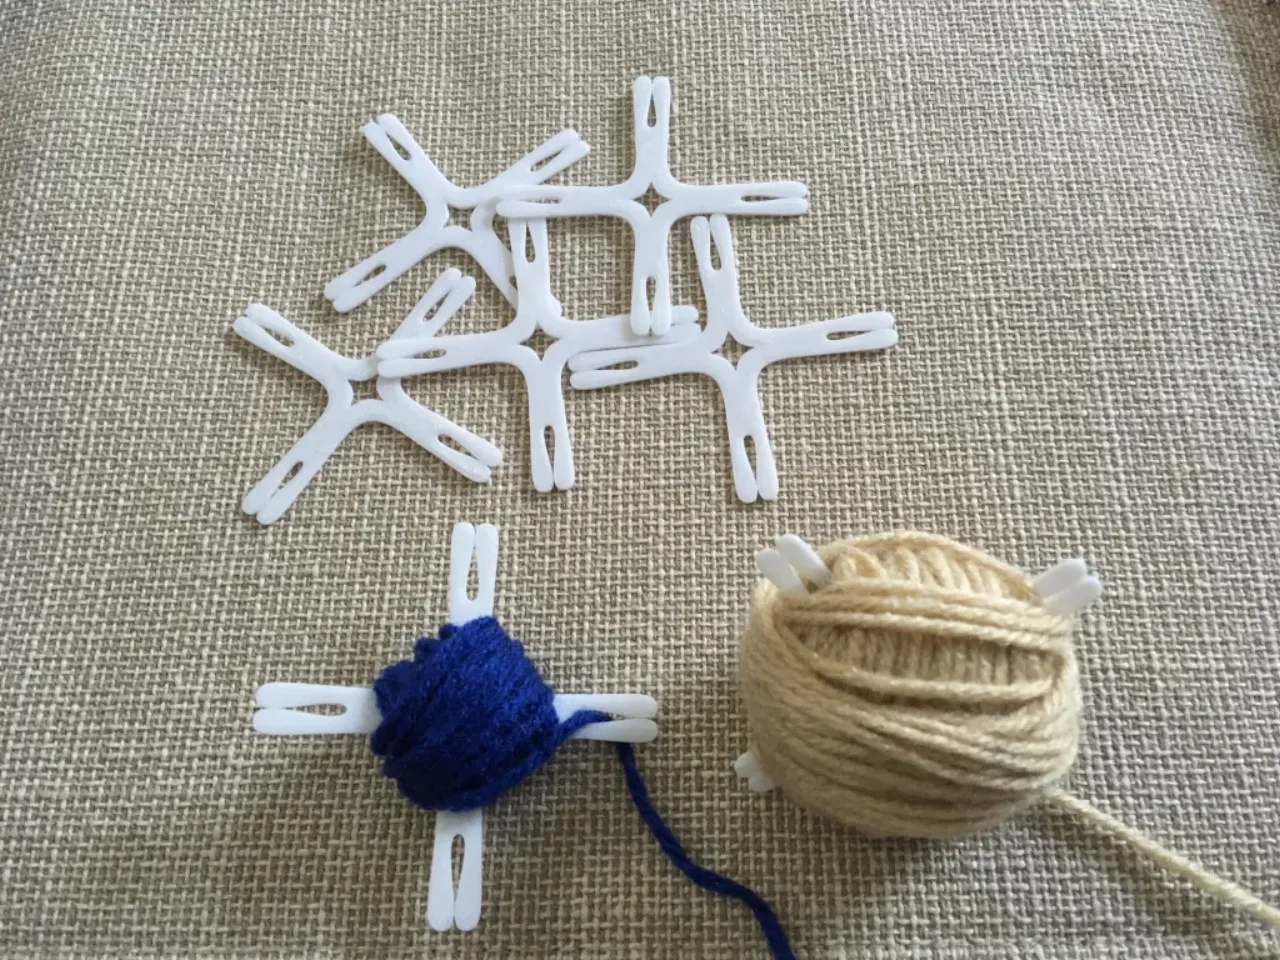 How To Make a Yarn Bobbin for Knitting or Crochet 